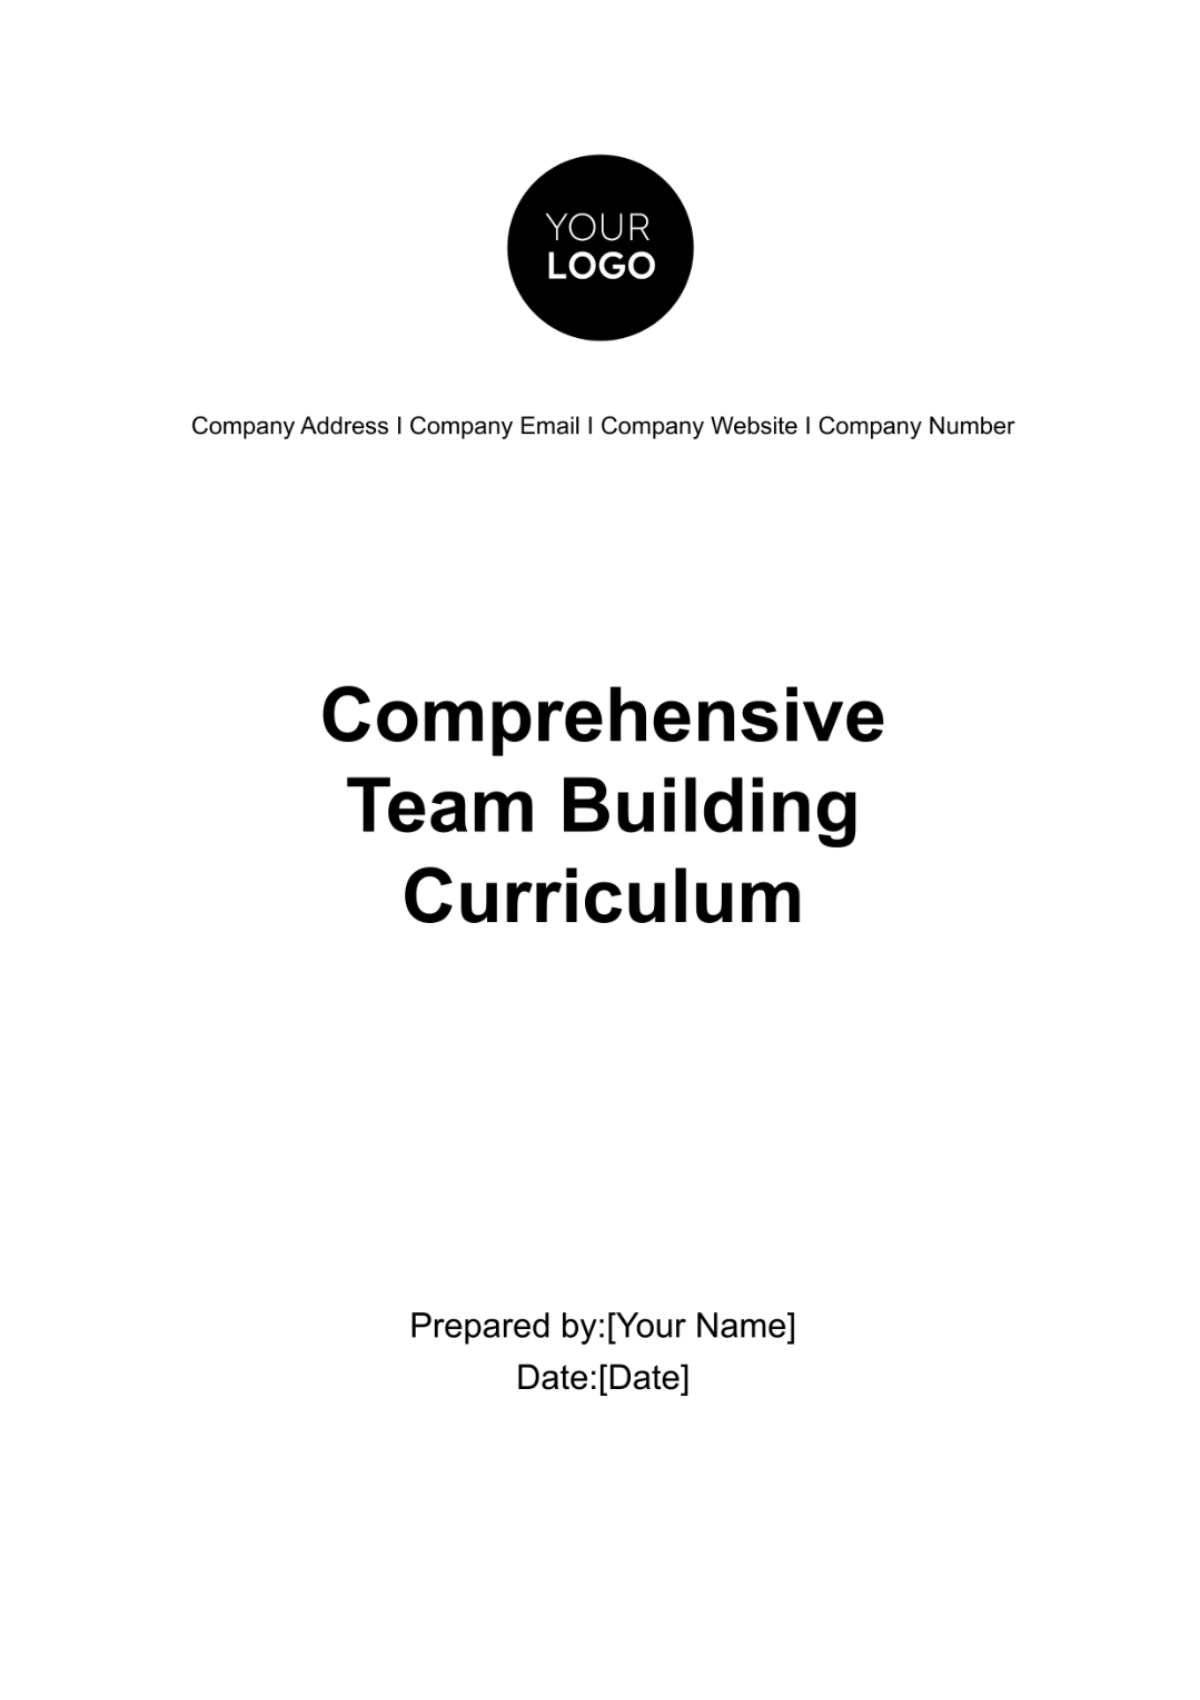 Comprehensive Team Building Curriculum HR Template